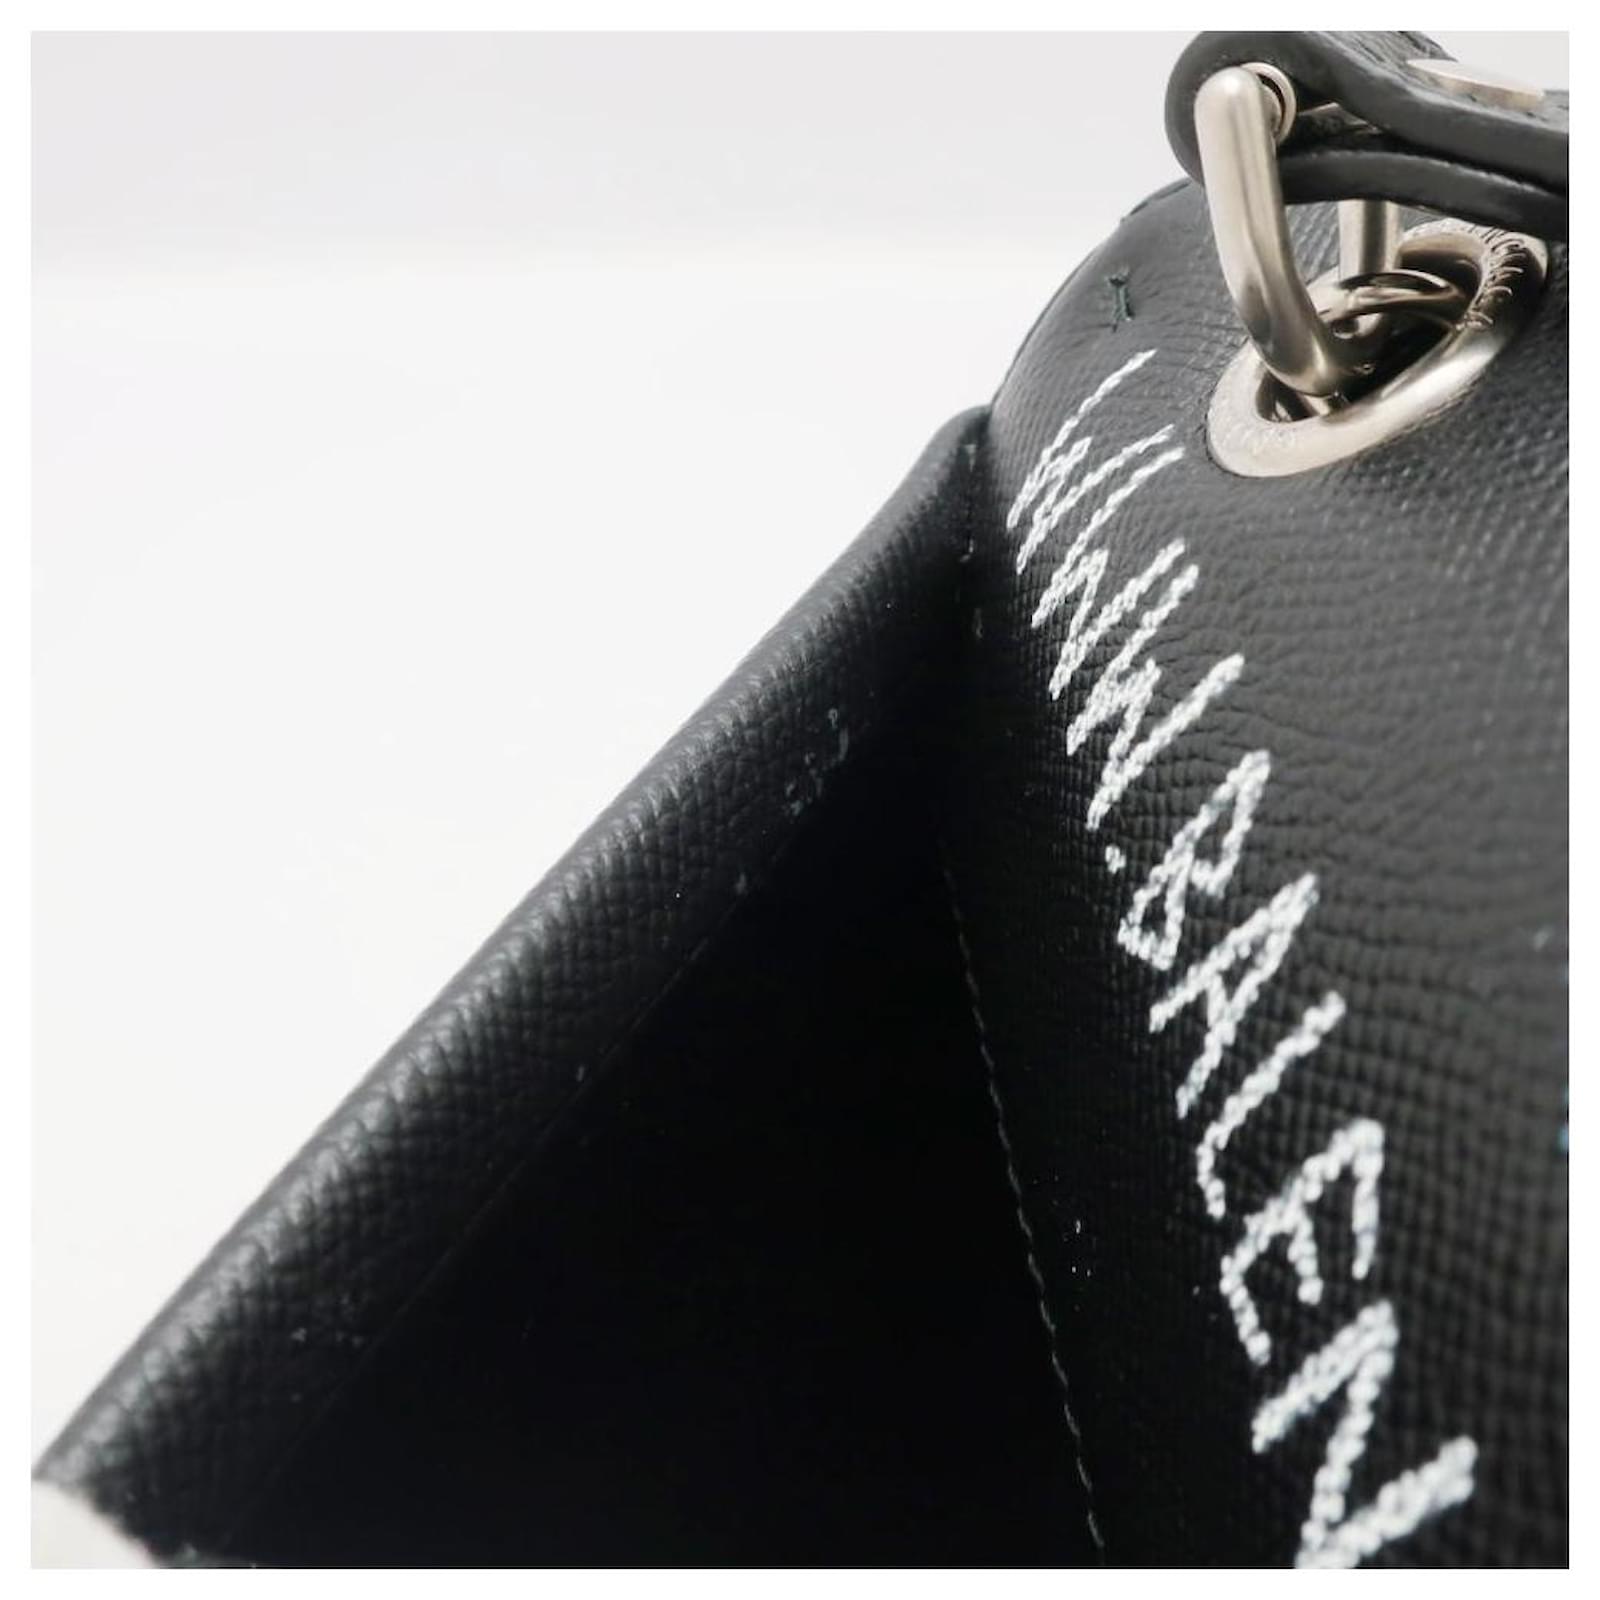 BALENCIAGA BB Round M Chain Shoulder Bag Leather Multicolor